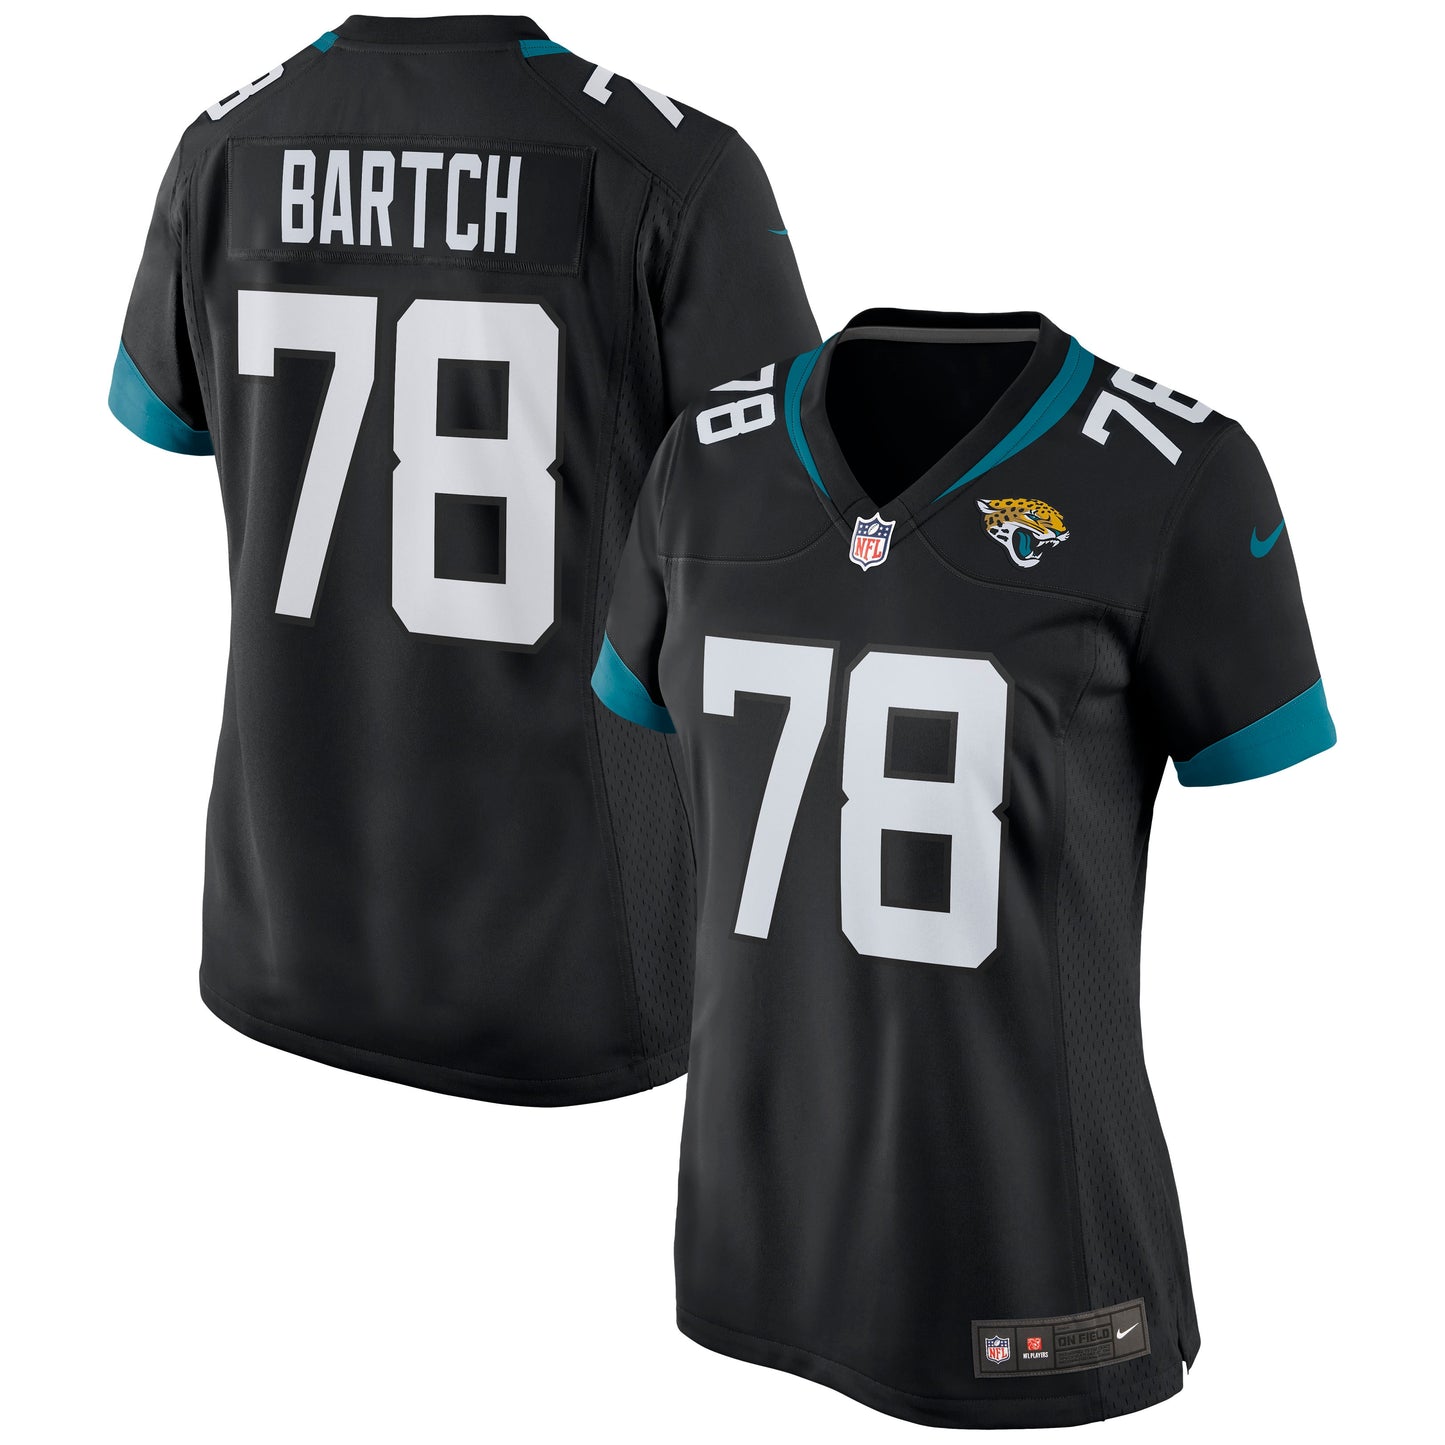 Ben Bartch Jacksonville Jaguars Nike Women's Game Jersey - Black